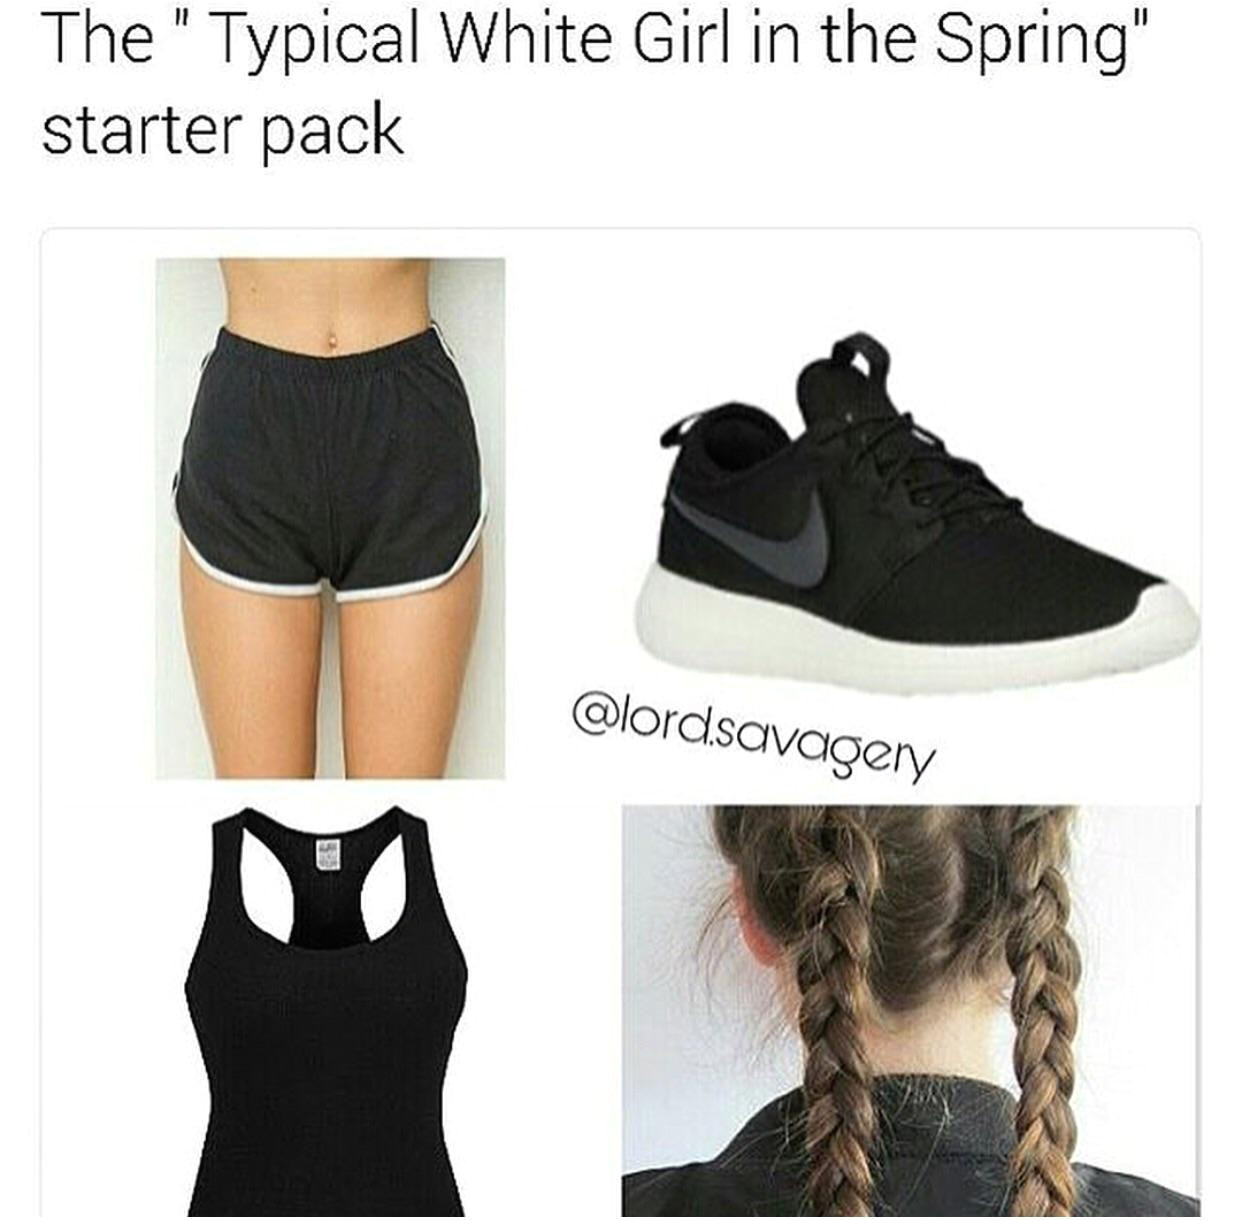 typical white girl in the spring starterpacks